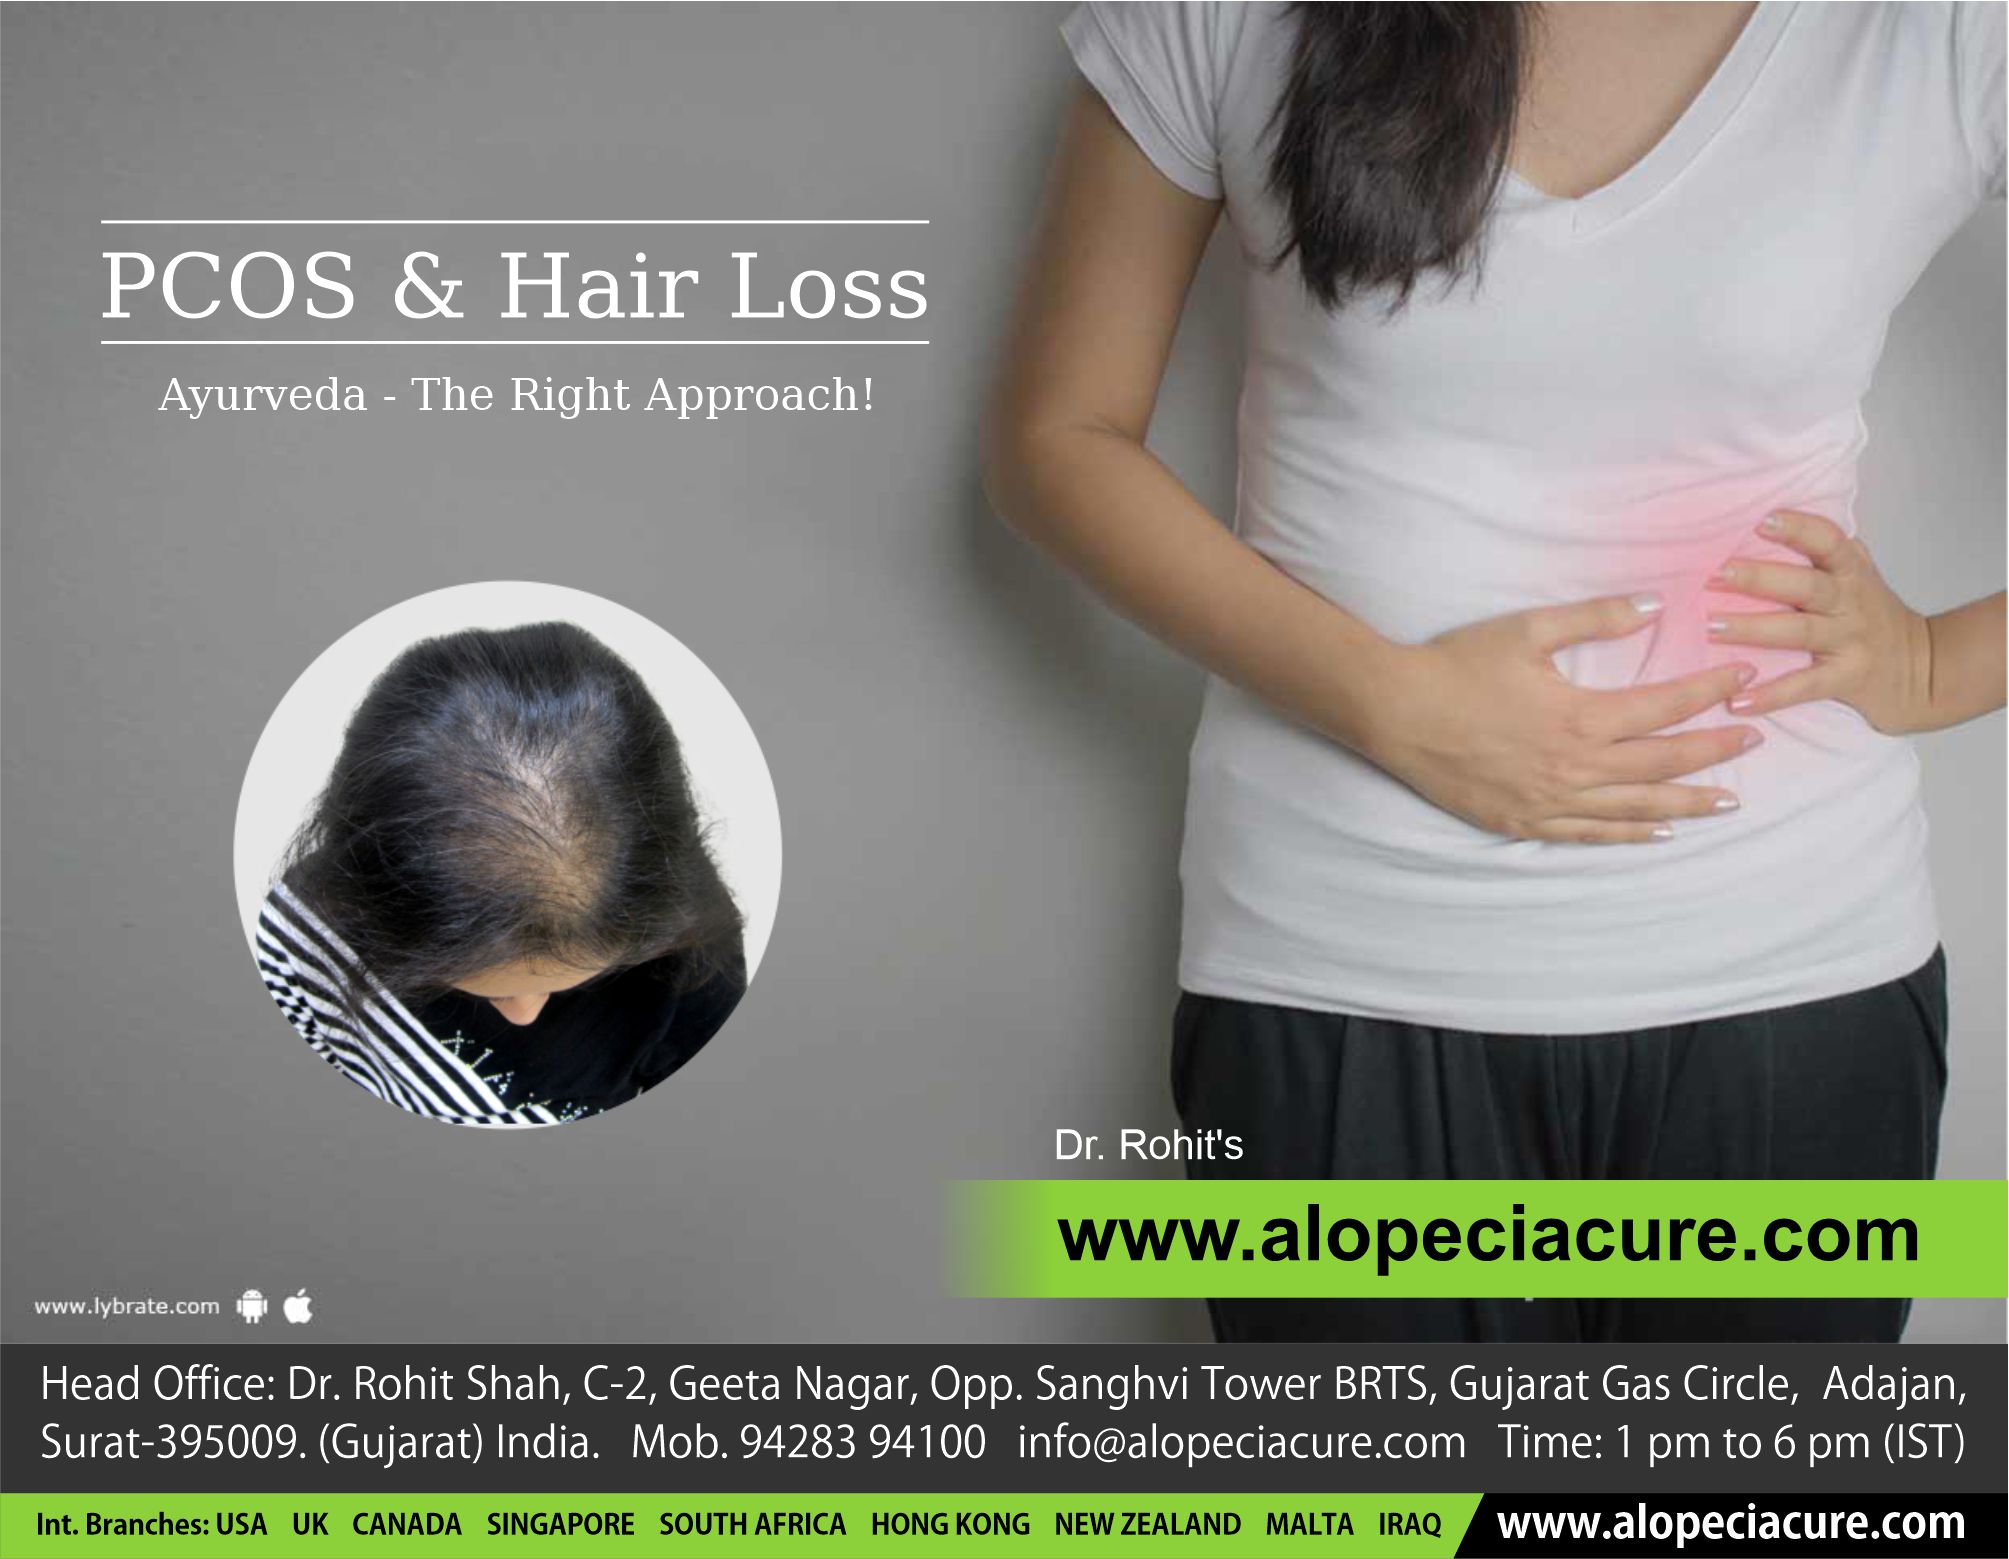 New alopecia treatment CTP-543 helps hair regrowth in alopecia areata